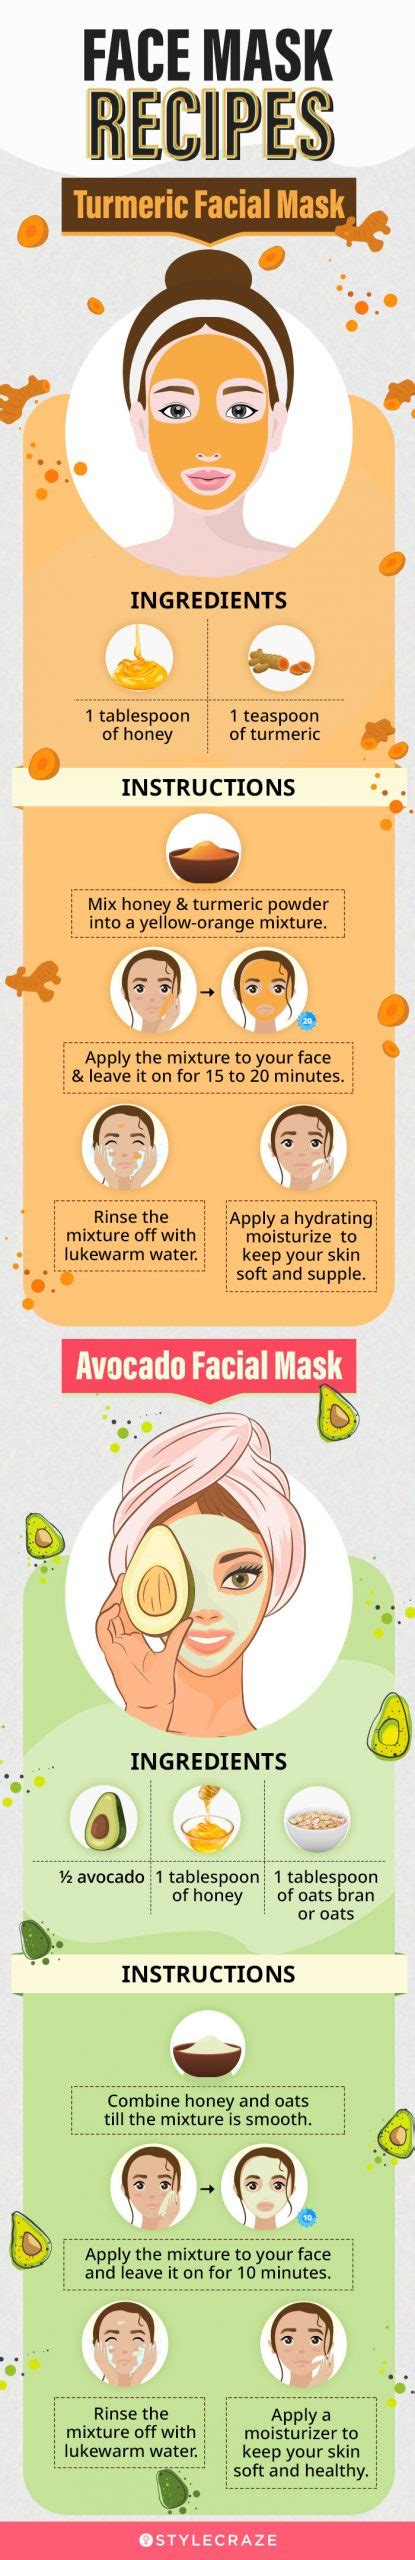 How To Do A Facial At Home 4 Easy Steps Precautions And Tips